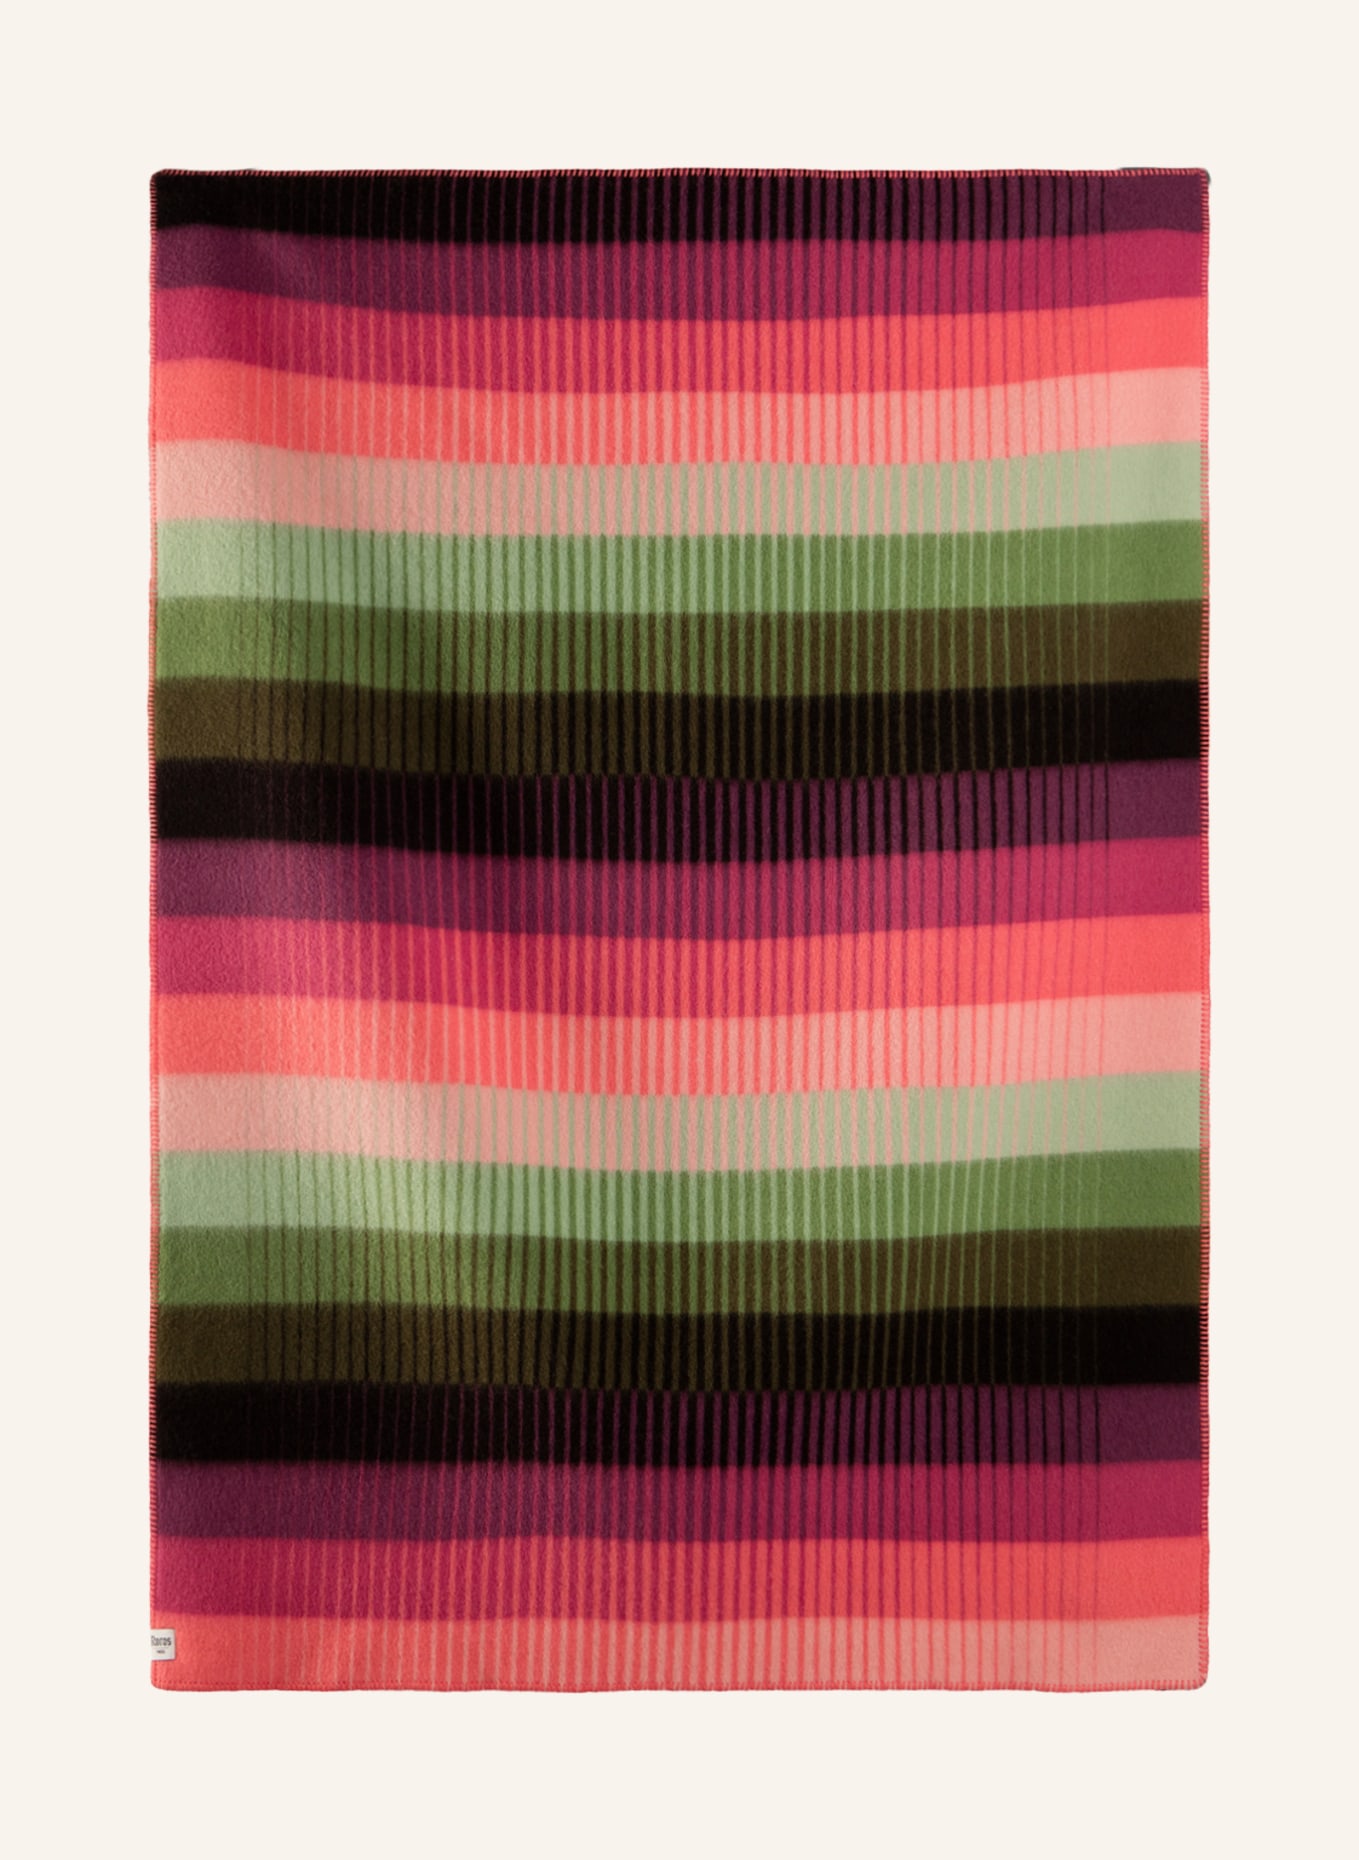 Røros Tweed Tweed-Plaid ÅSMUND, Farbe: DUNKELROT/ HELLROT/ GRÜN (Bild 2)